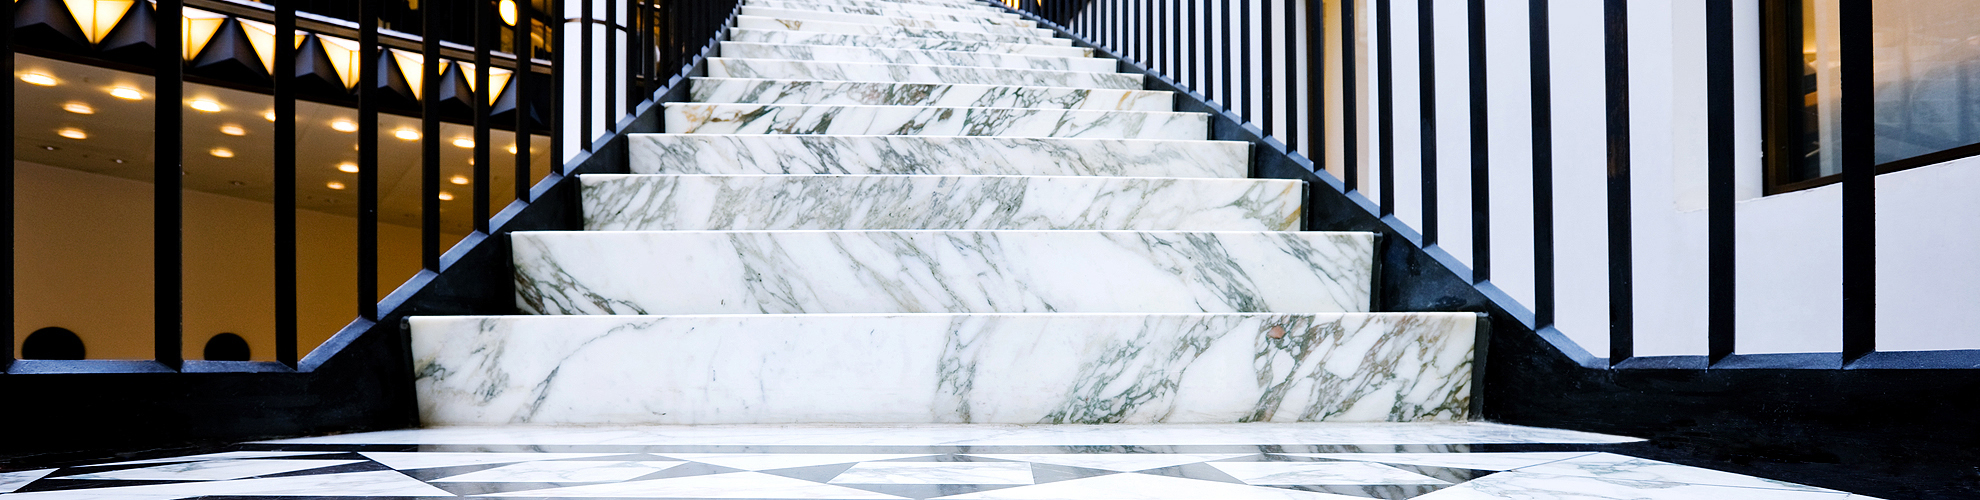 pavimenti in marmo moderni